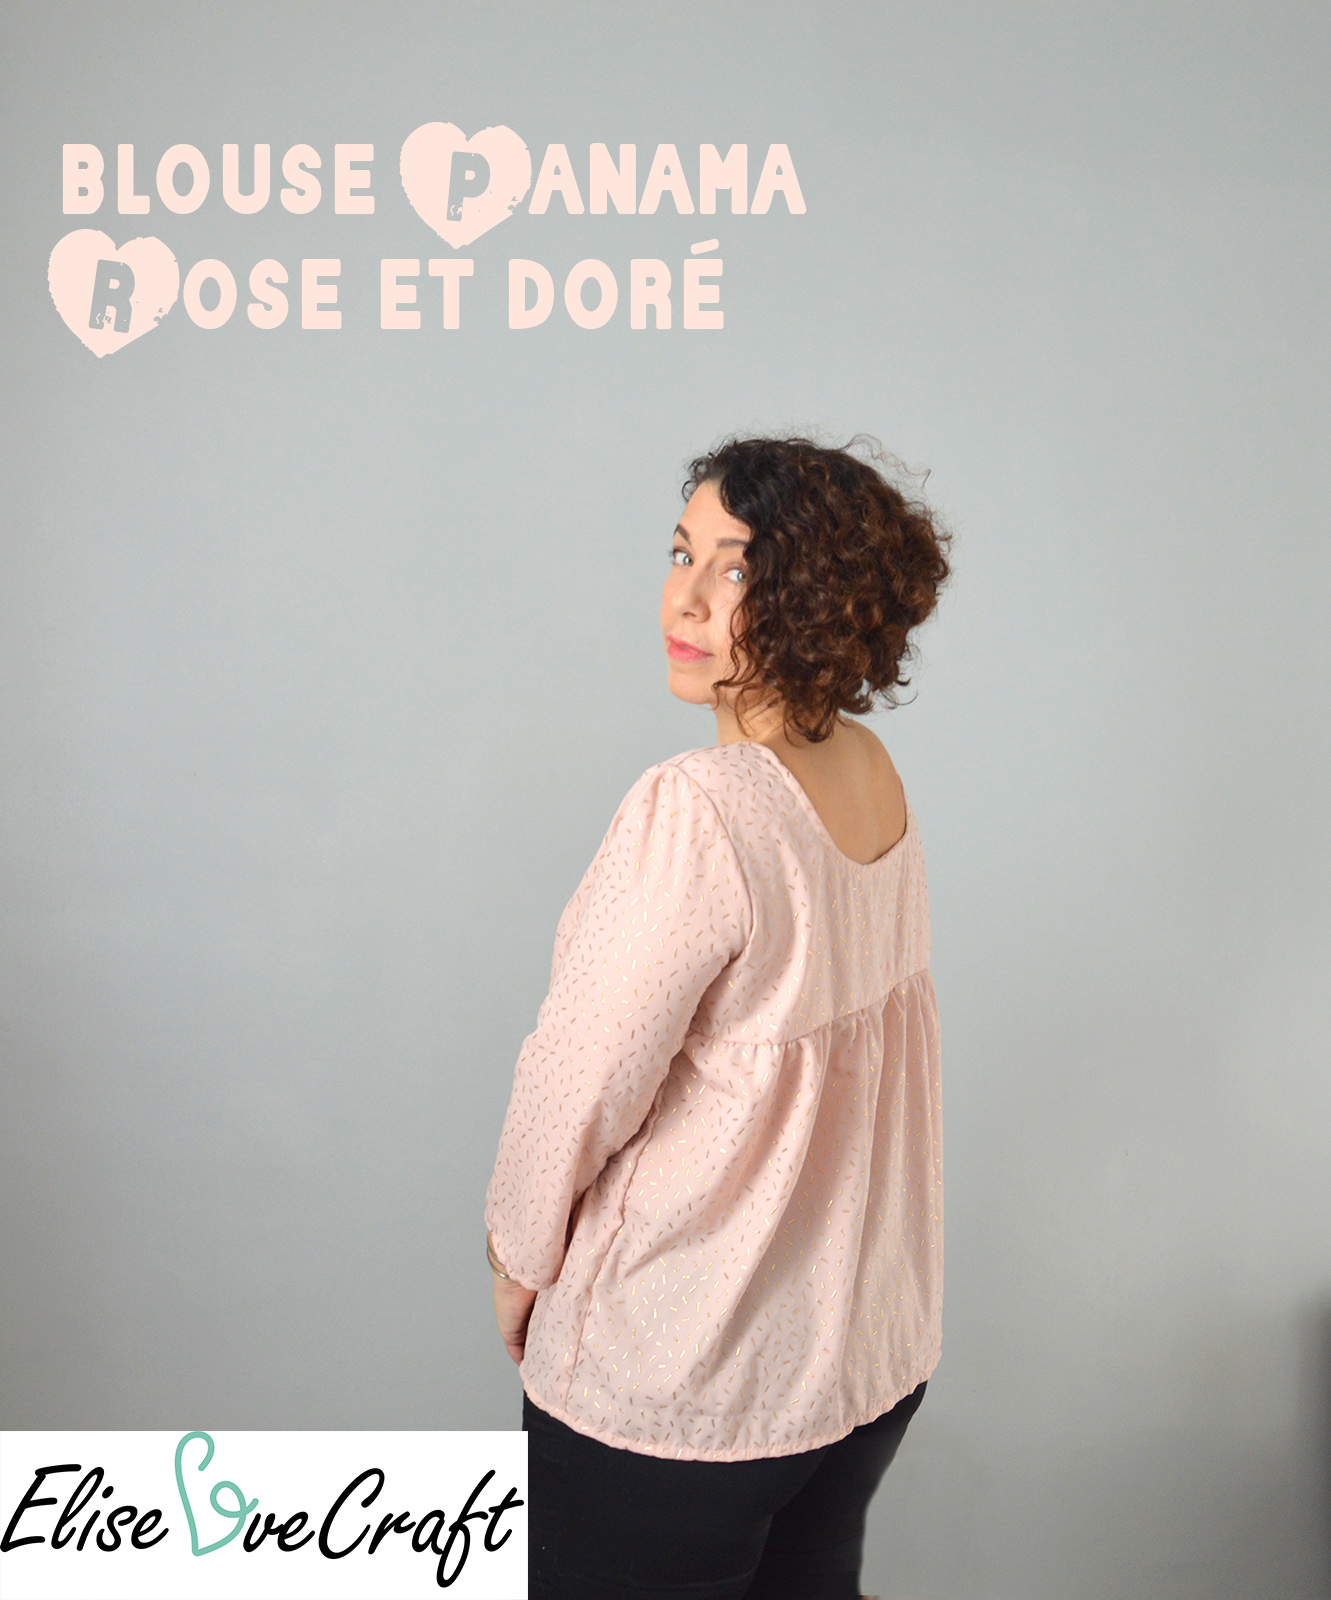 blouse panama rose pinit